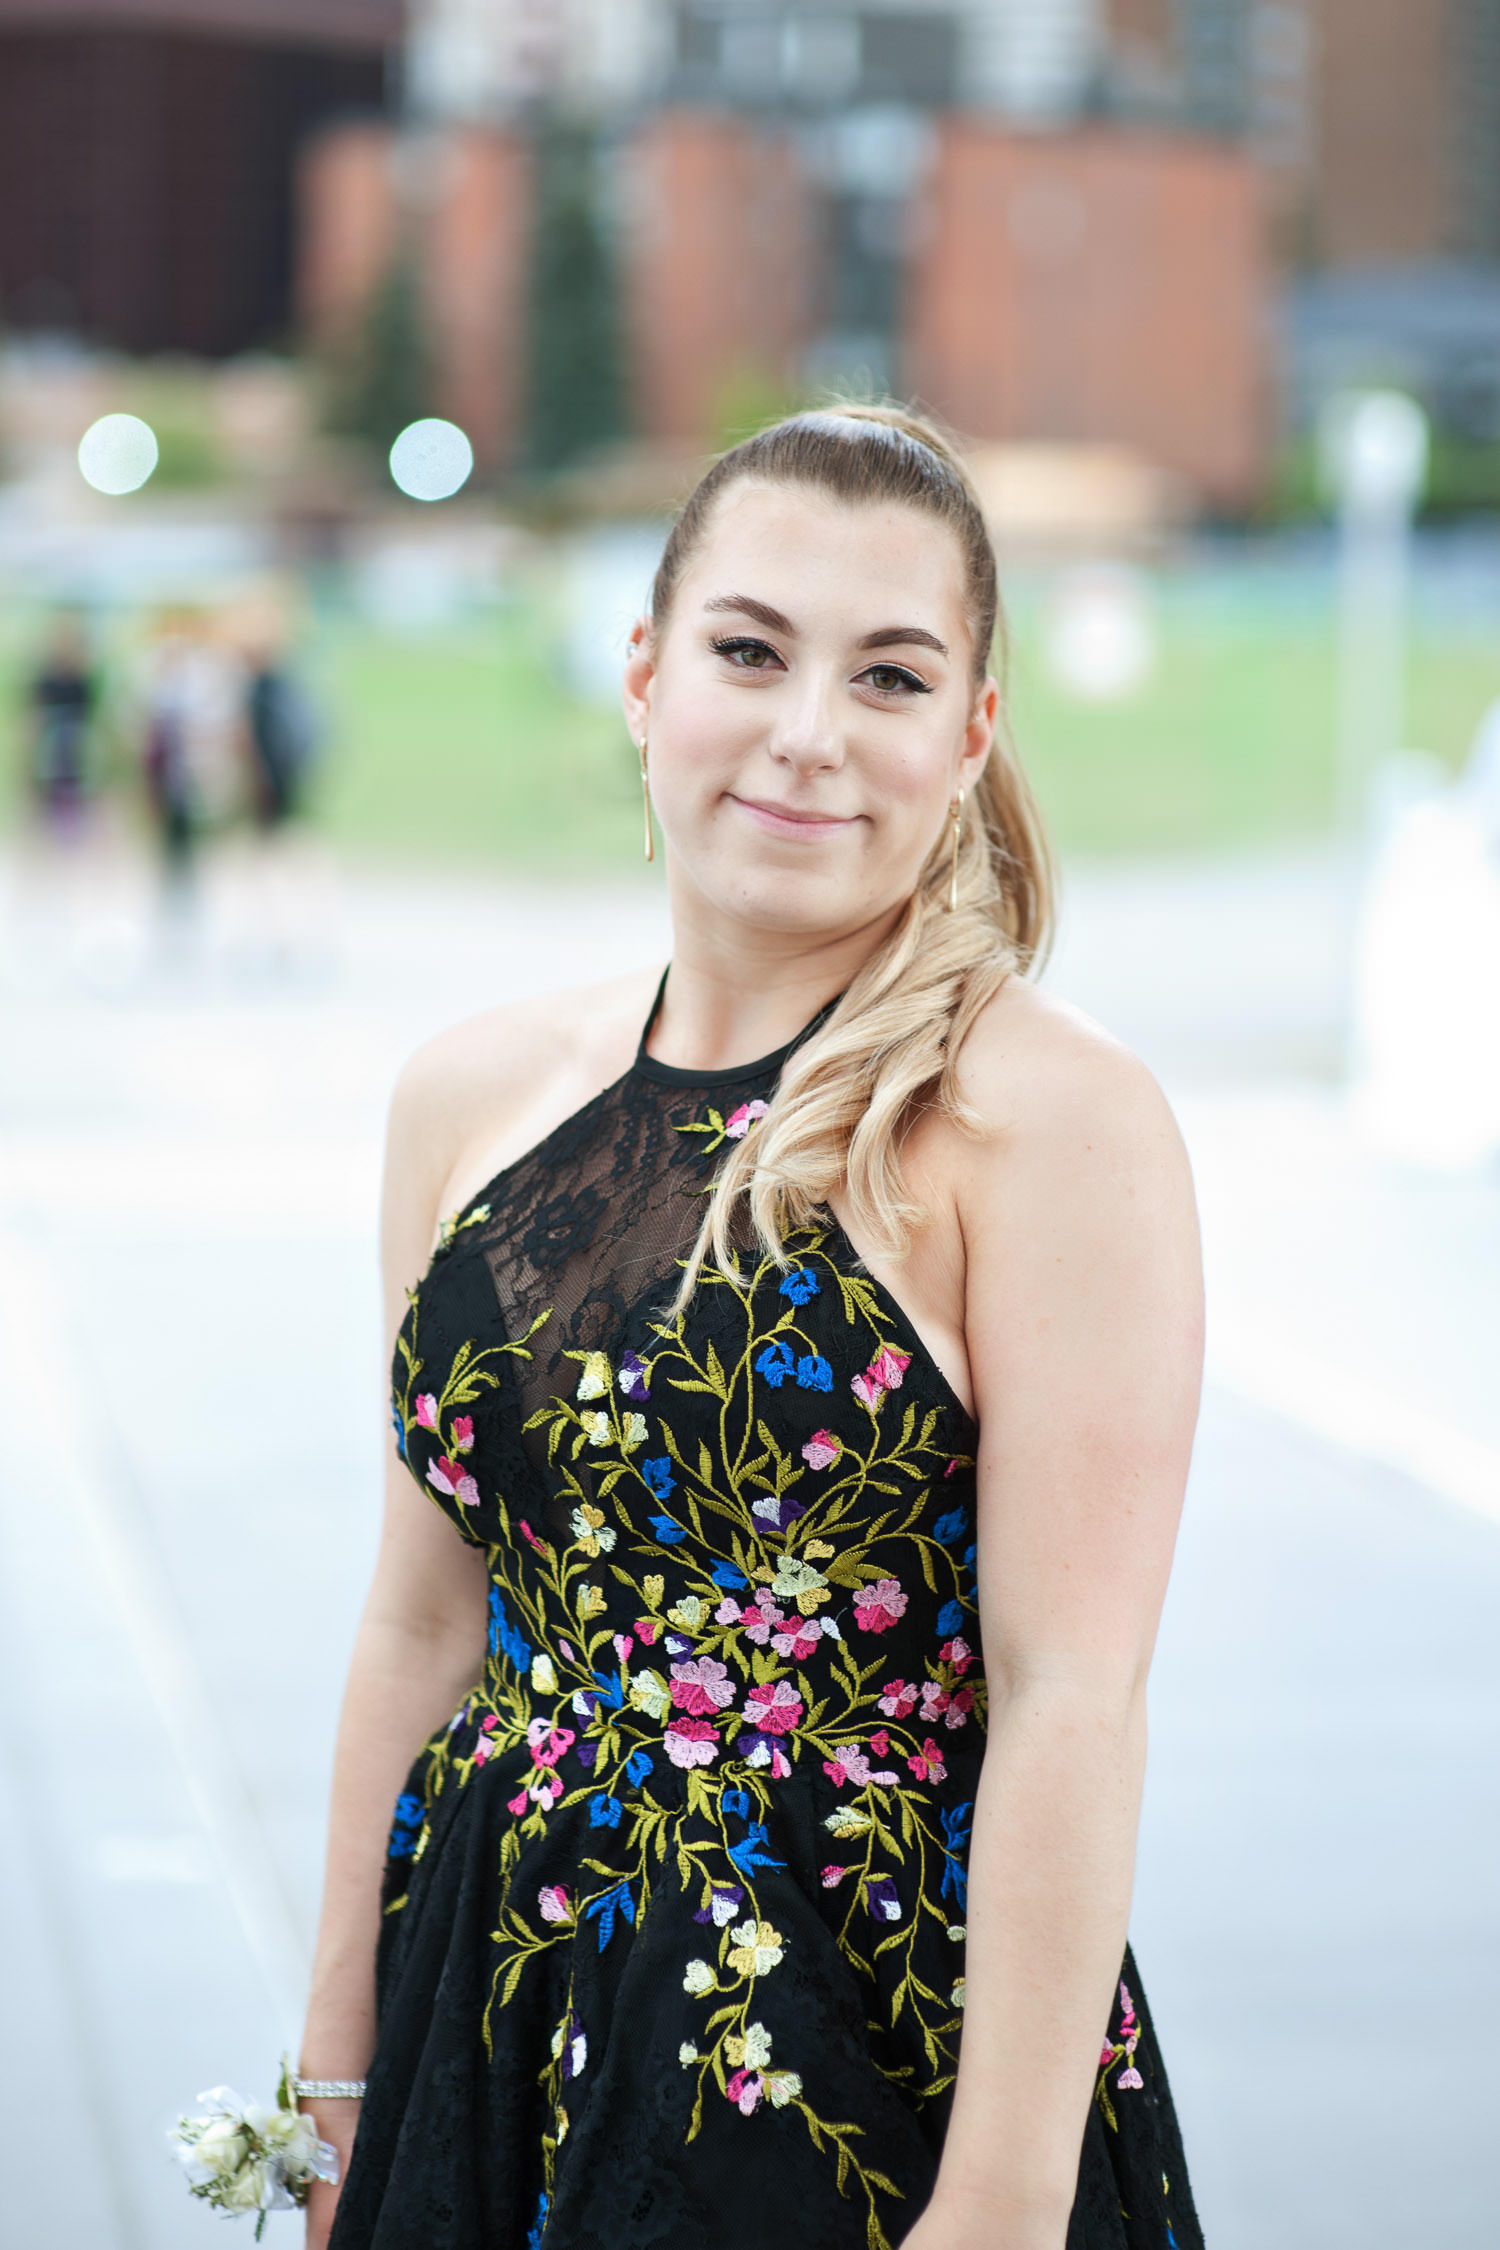 Calgary graduate wearing her halter-style dress captured by Tara Whittaker Photography